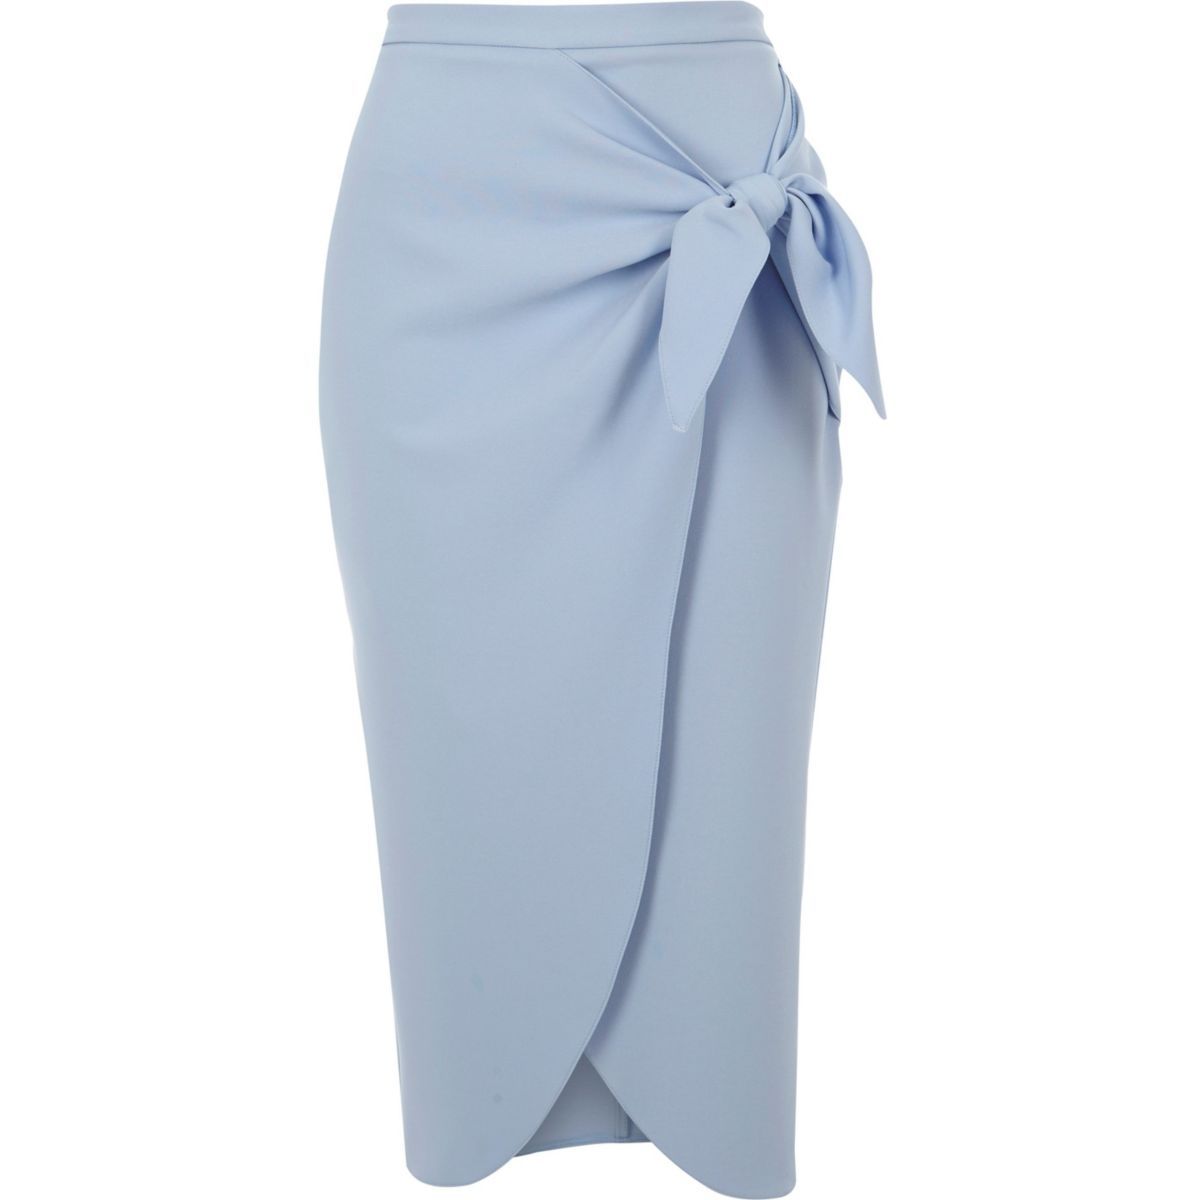 Blue twist front pencil skirt